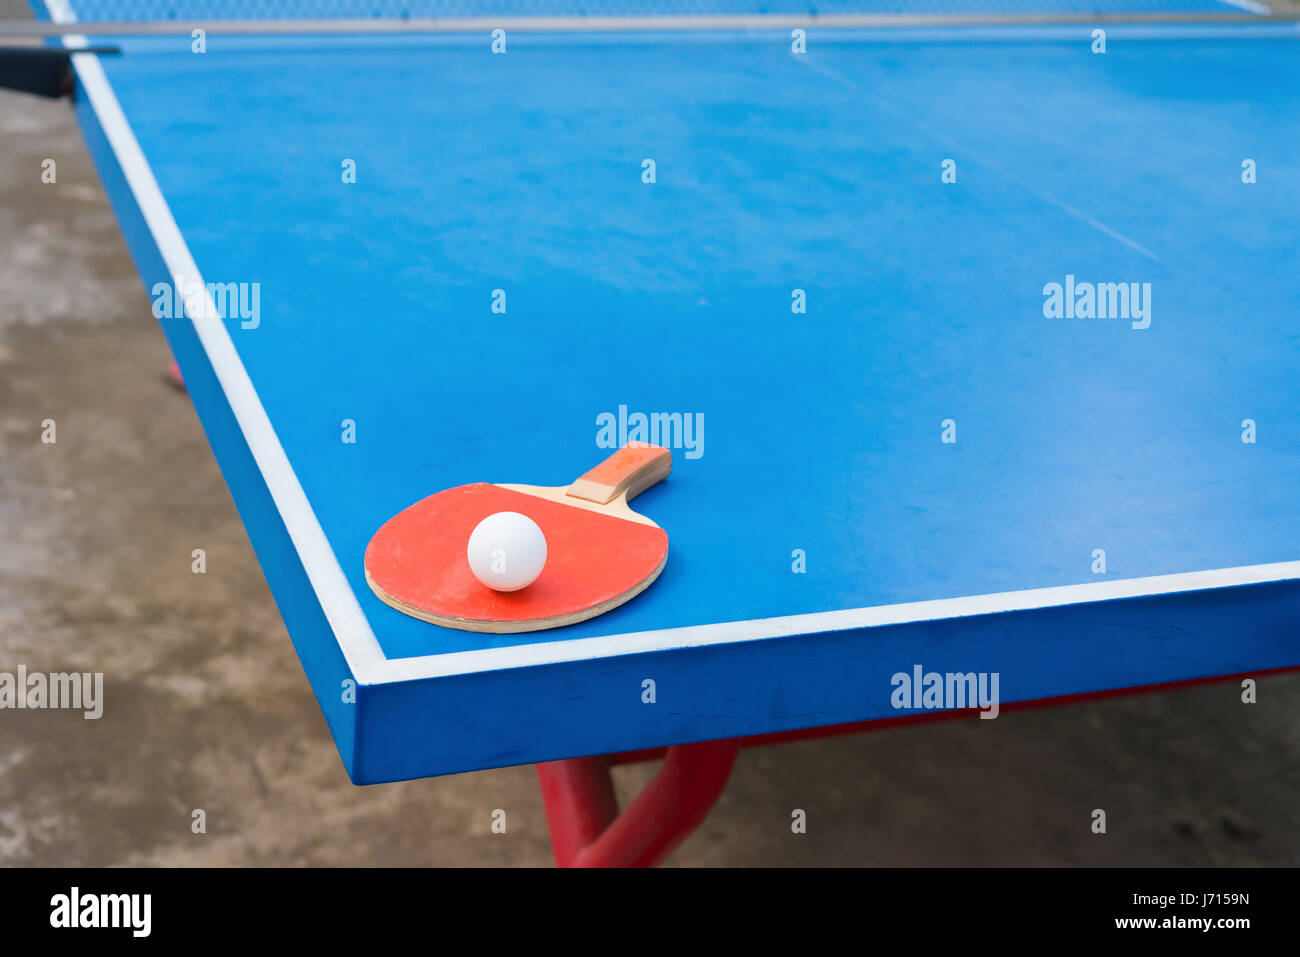 pingpong racket and ball on a blue pingpong table Stock Photo